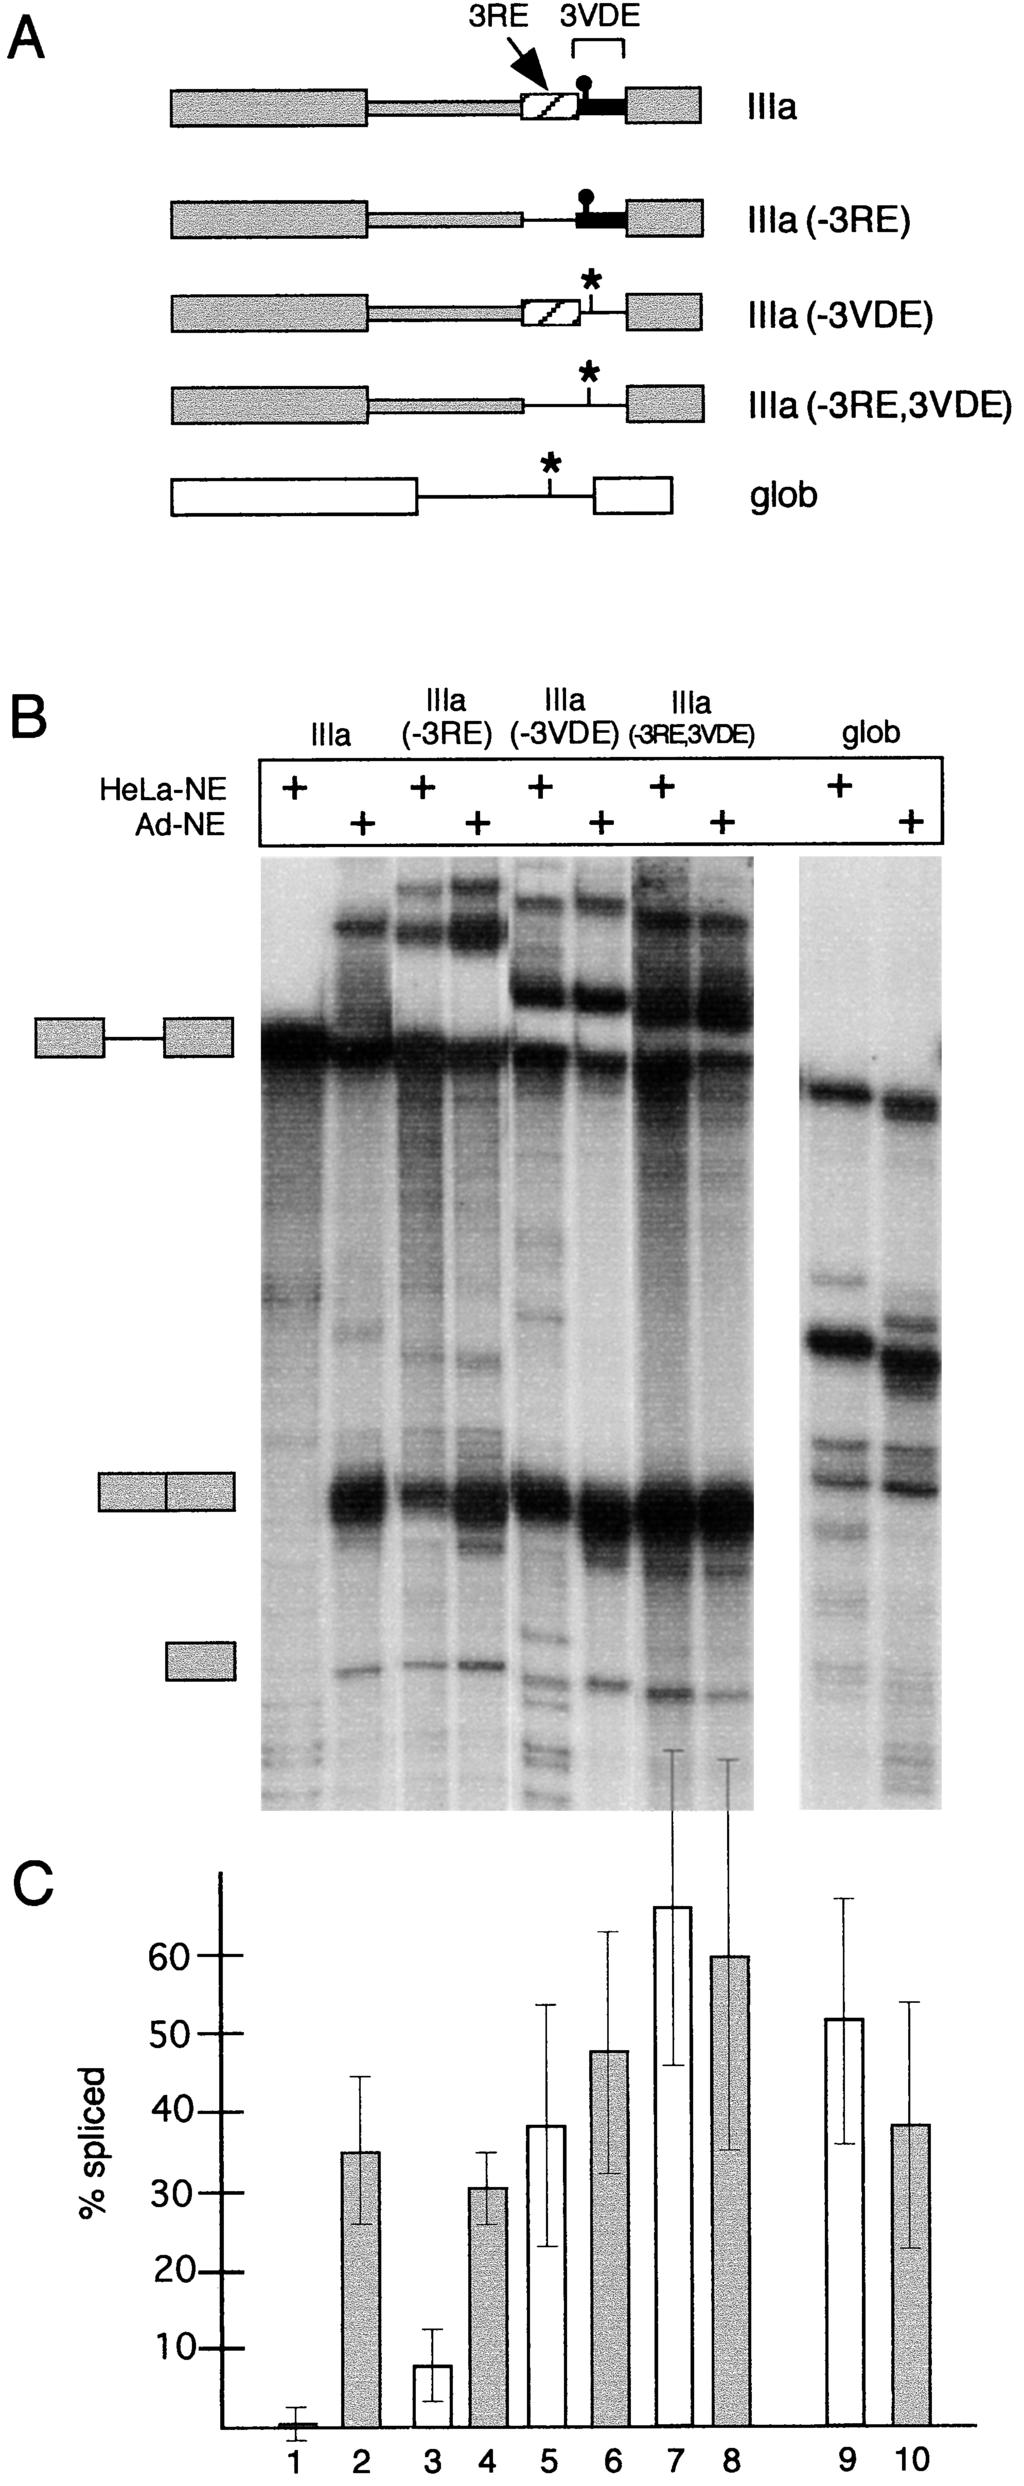 VOL. 20, 2000 SEQUENCE ELEMENTS REGULATING IIIa PRE-mRNA SPLICING 2323 FIG. 6. The 3VDE functions as a Janus element: it abrogates IIIa splicing in HeLa-NE and enhances IIIa splicing in Ad-NE.